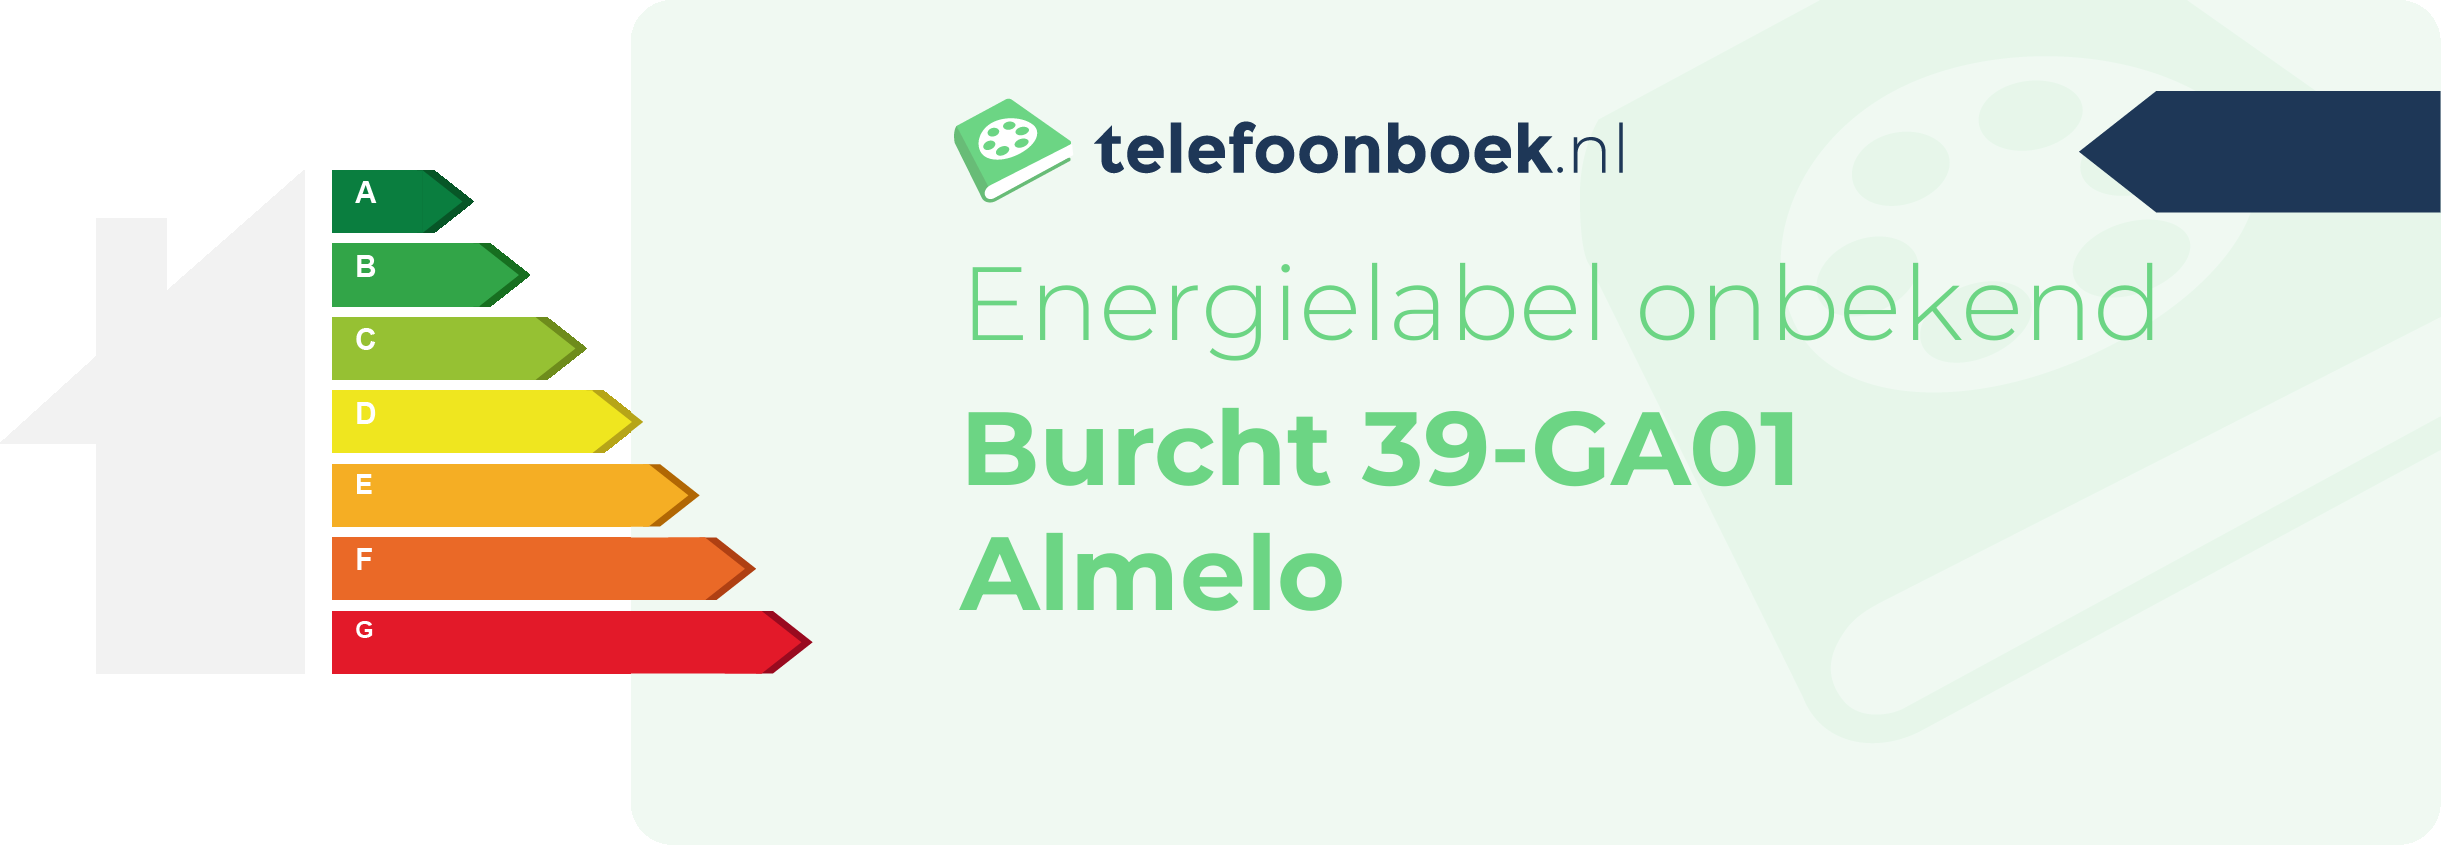 Energielabel Burcht 39-GA01 Almelo